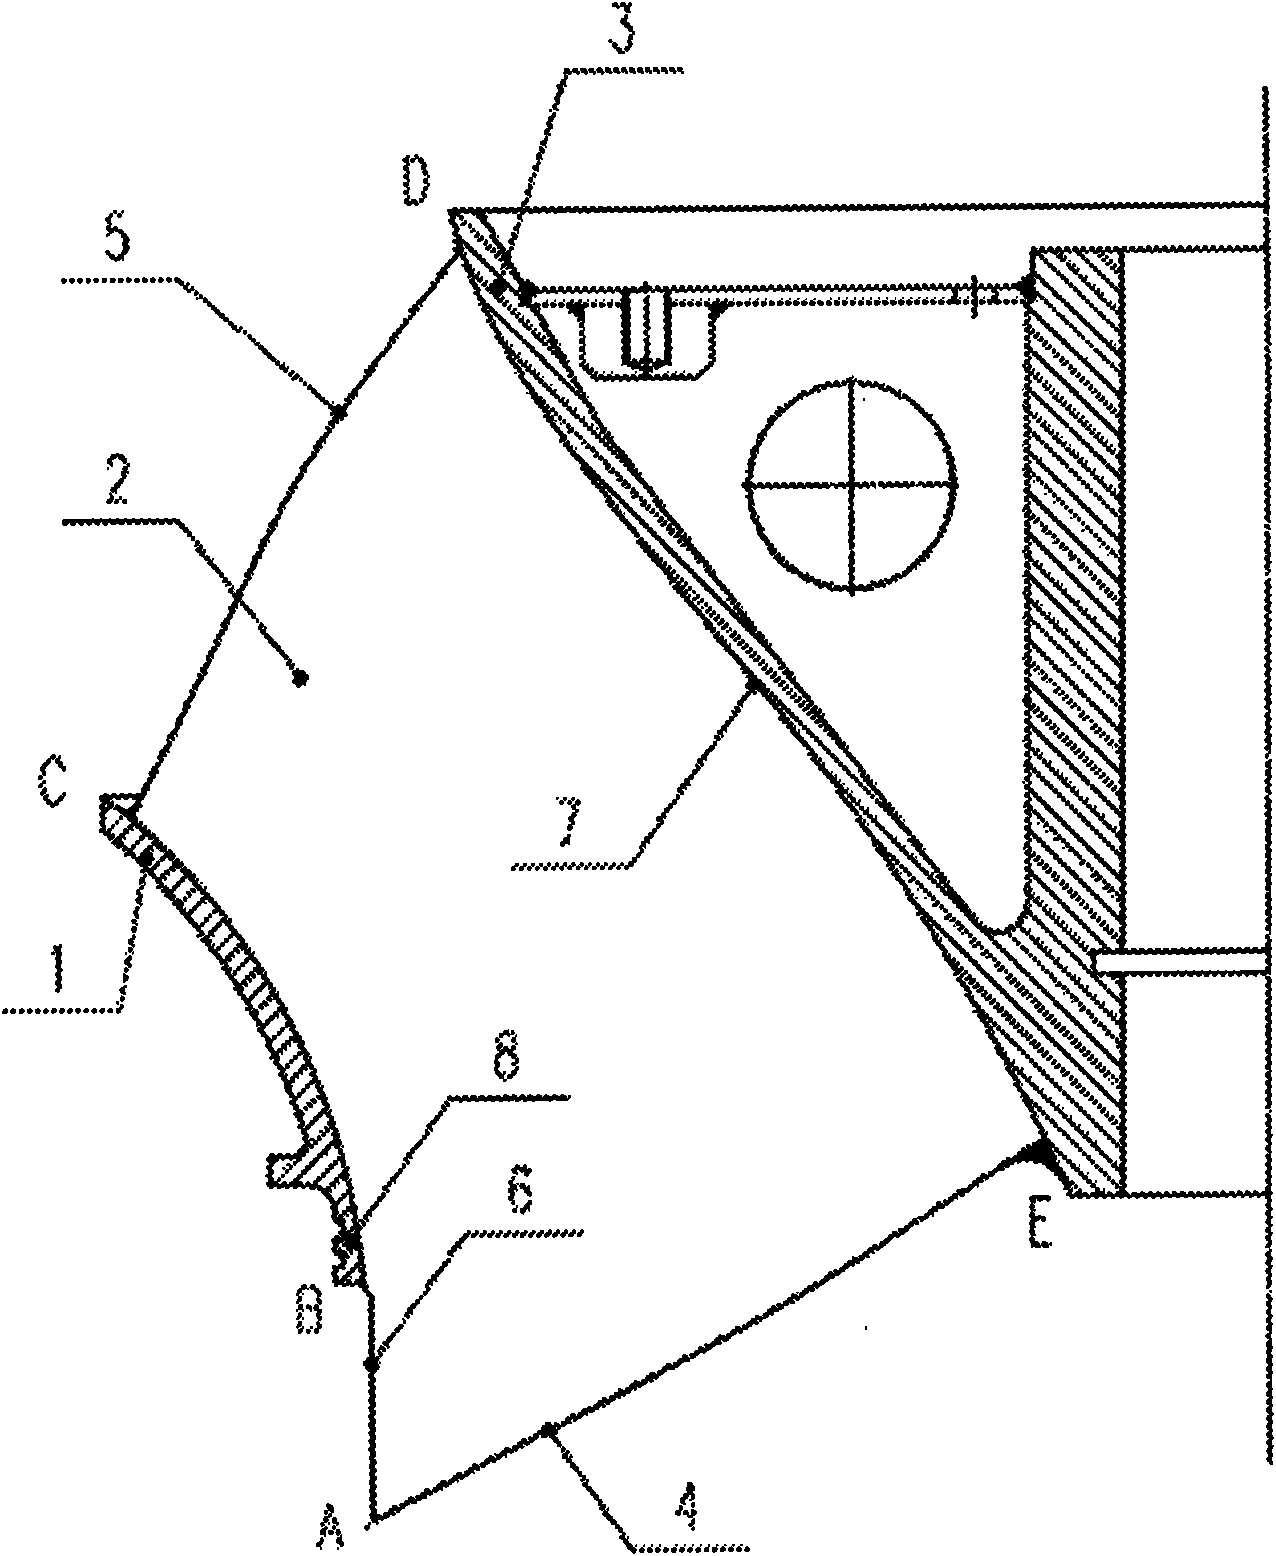 Mixed-flow pump impeller